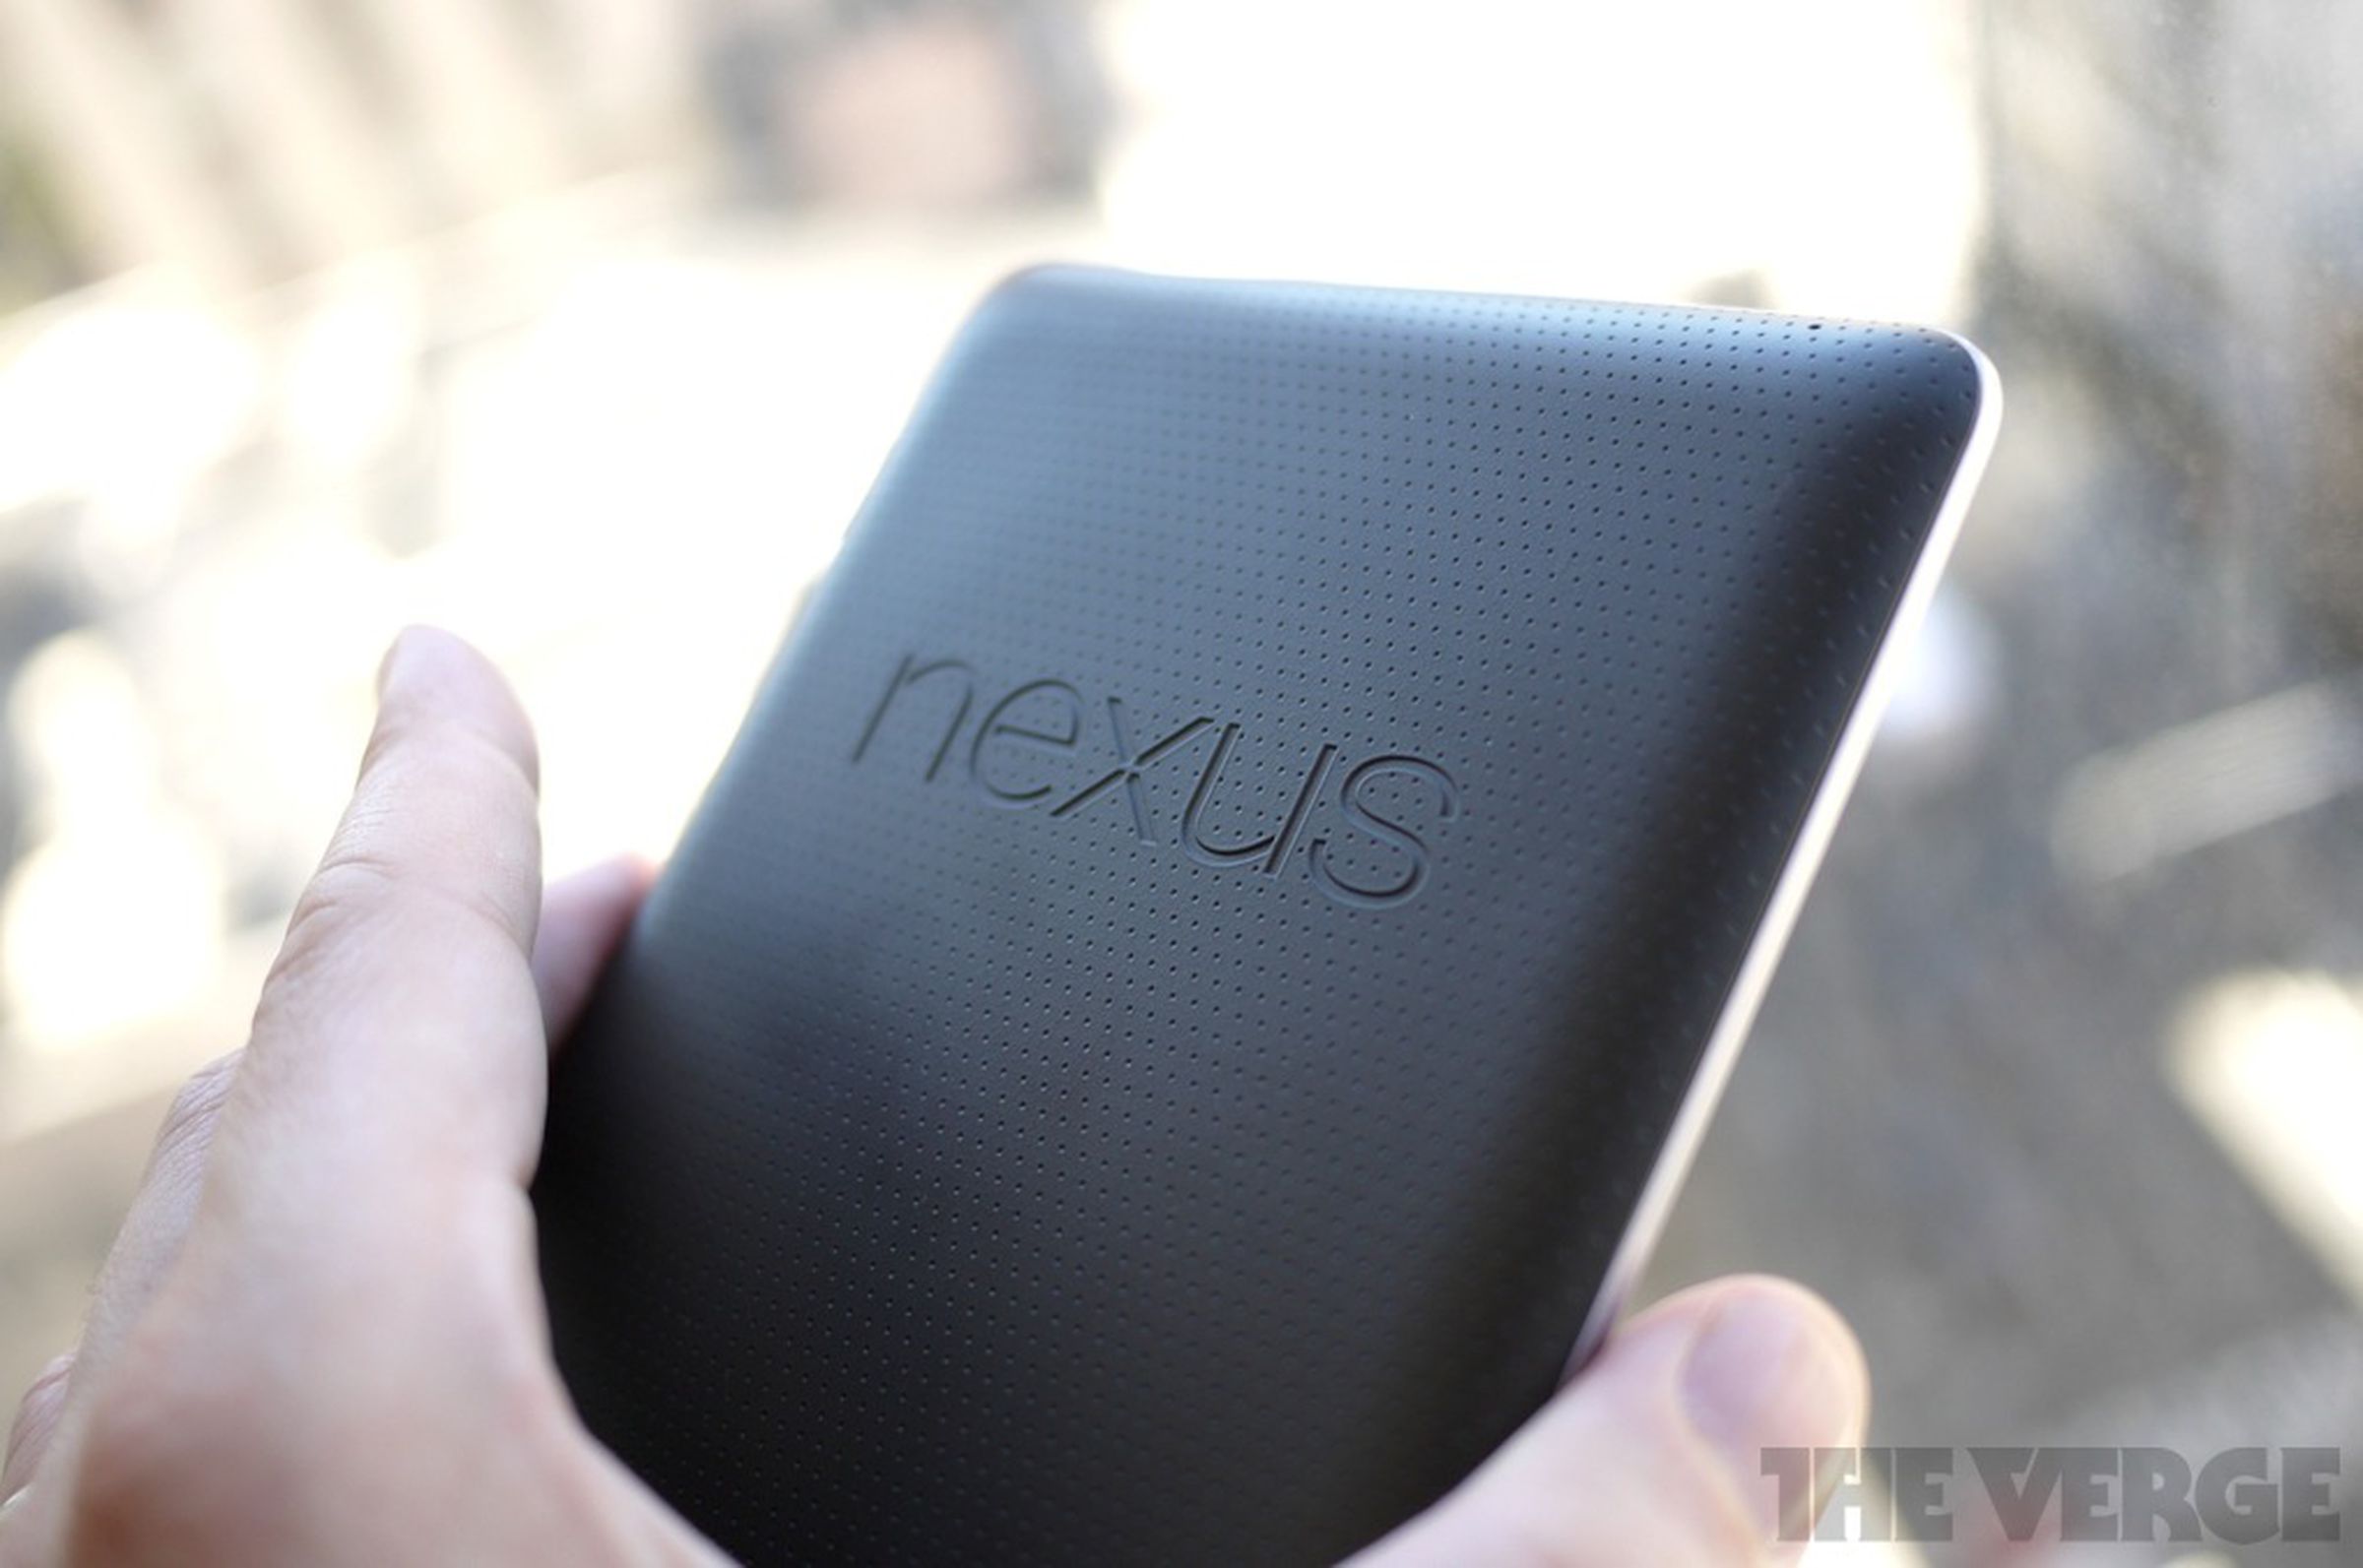 Google Nexus 7 pictures